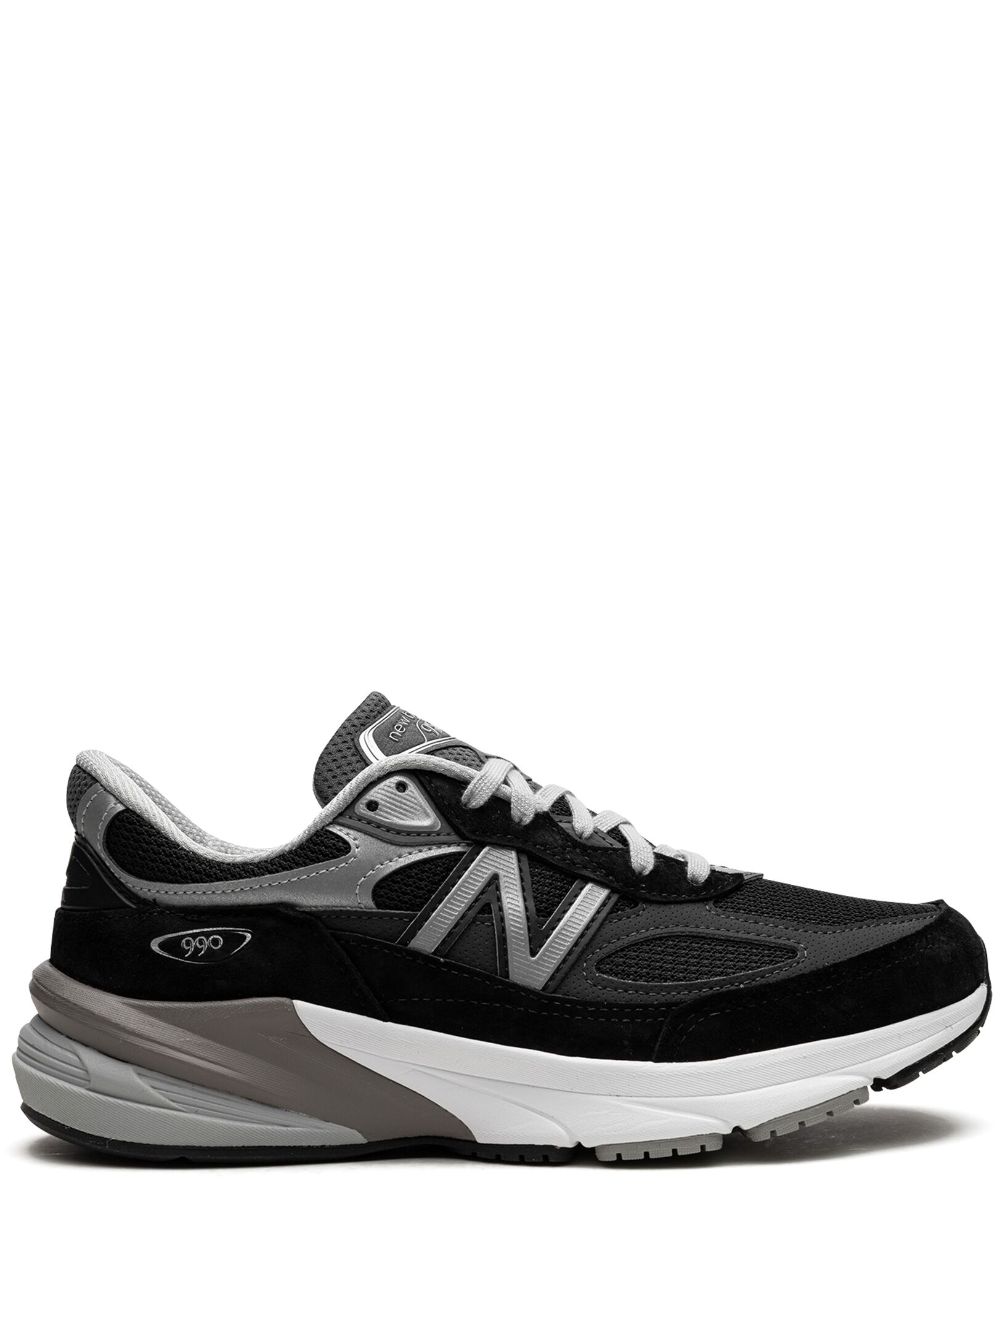 New Balance 990V6 "Black/Silver" sneakers von New Balance